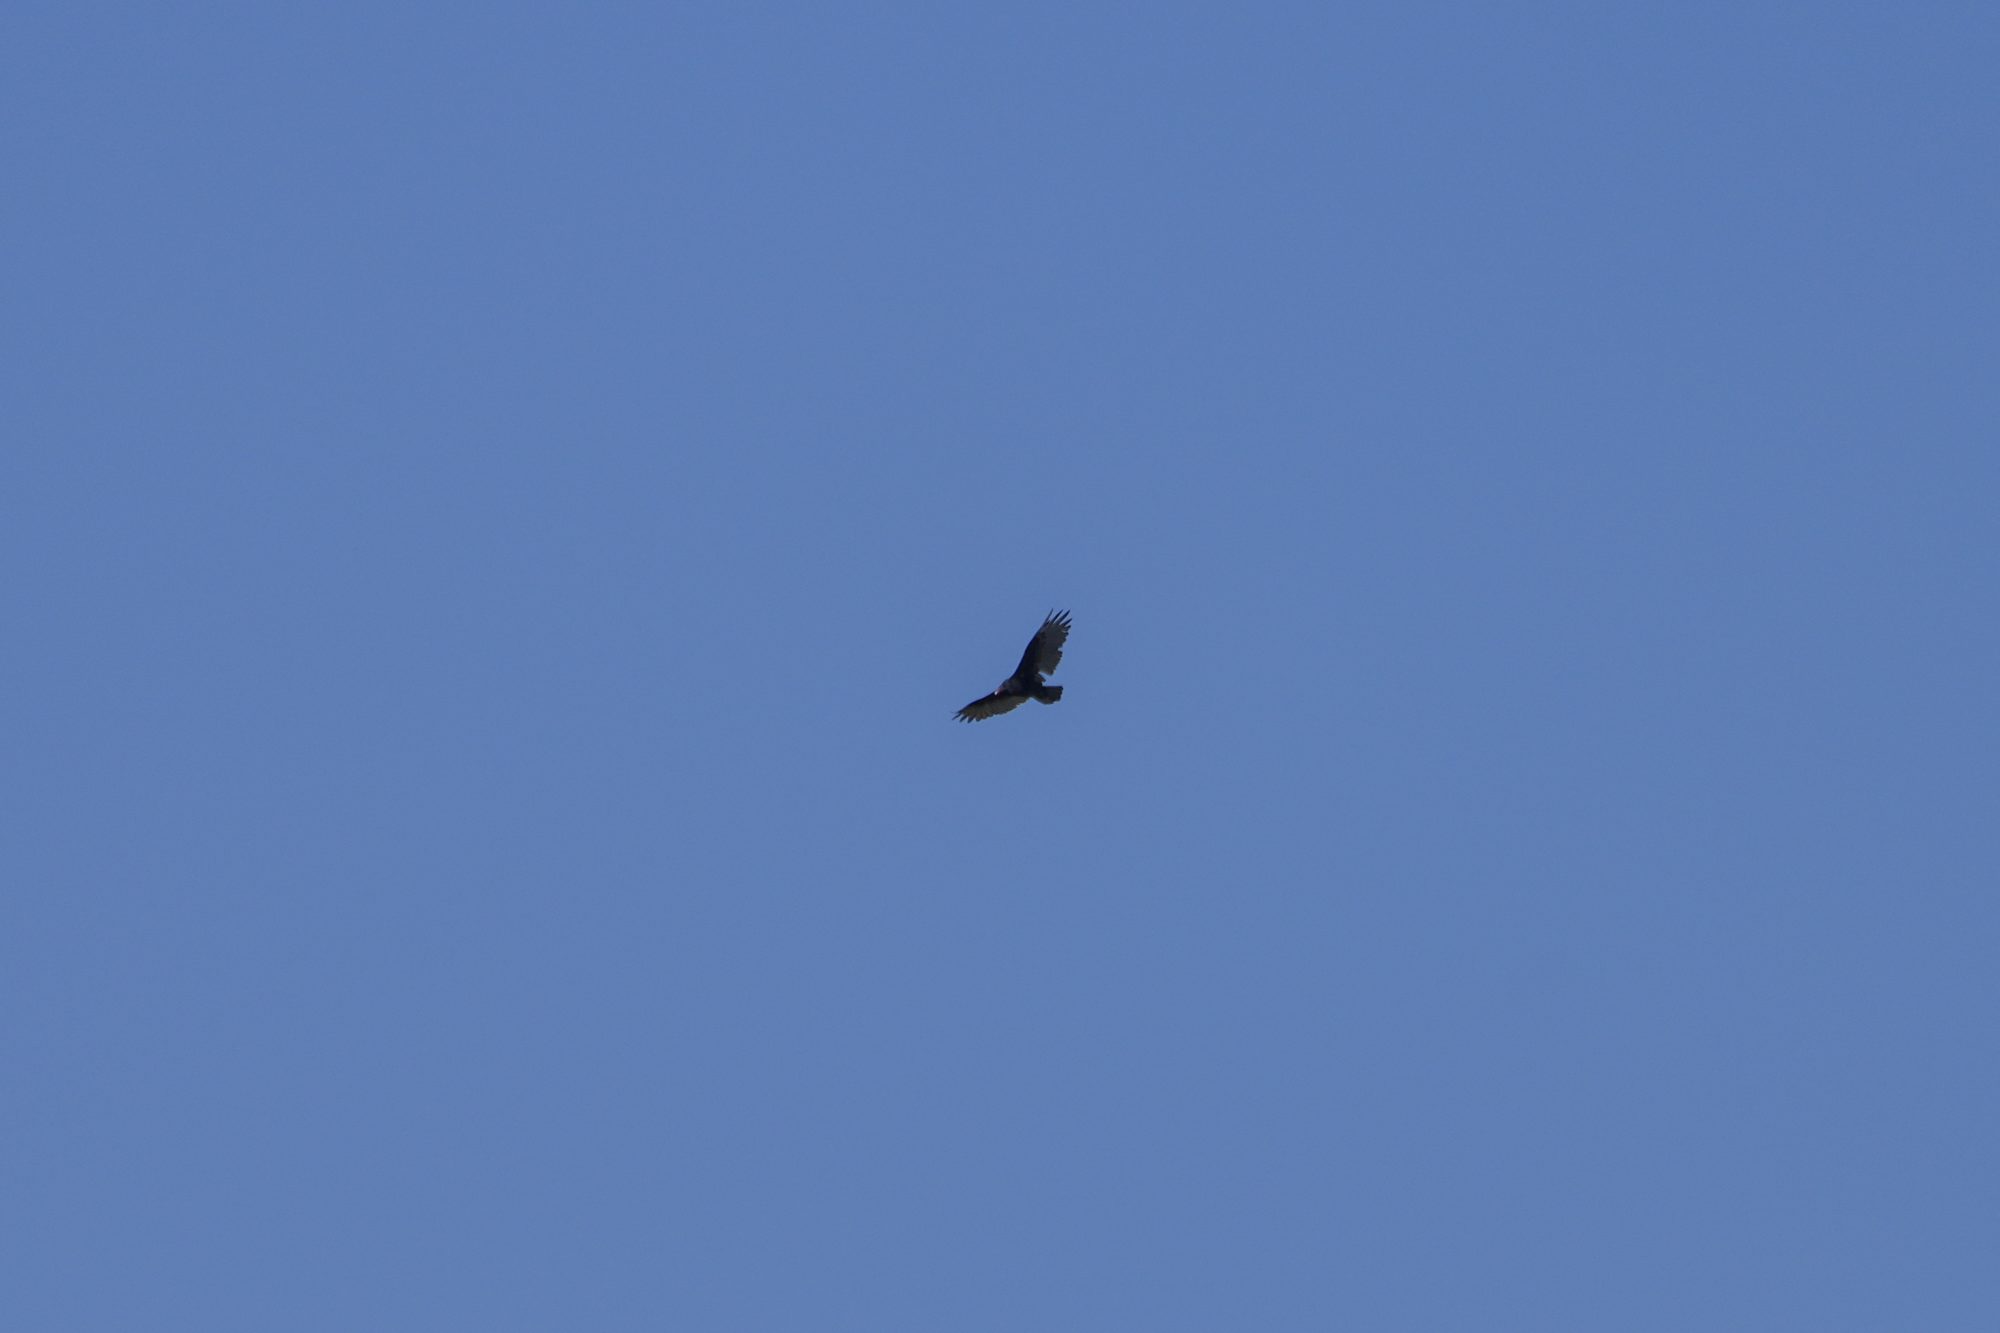 A Turkey Vulture soaring far up, in a blue sky